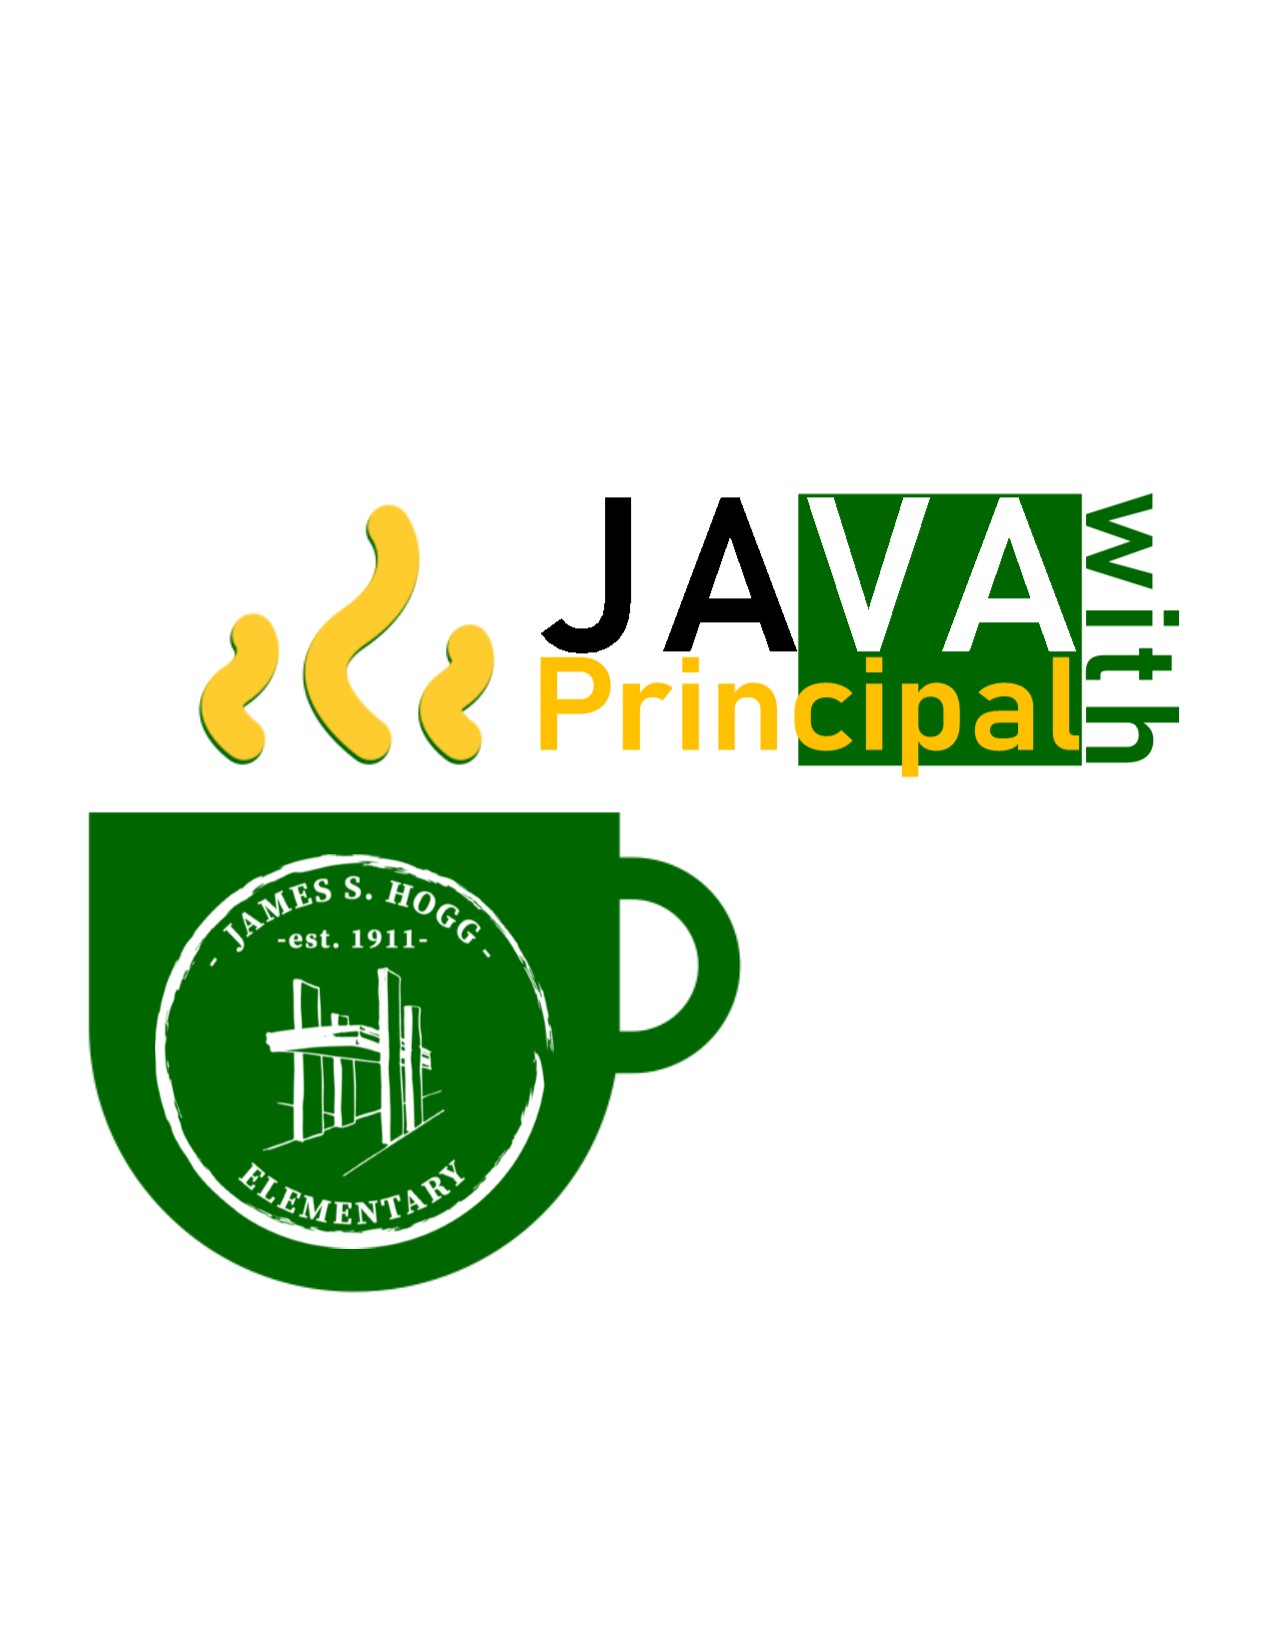  Java with the Principal